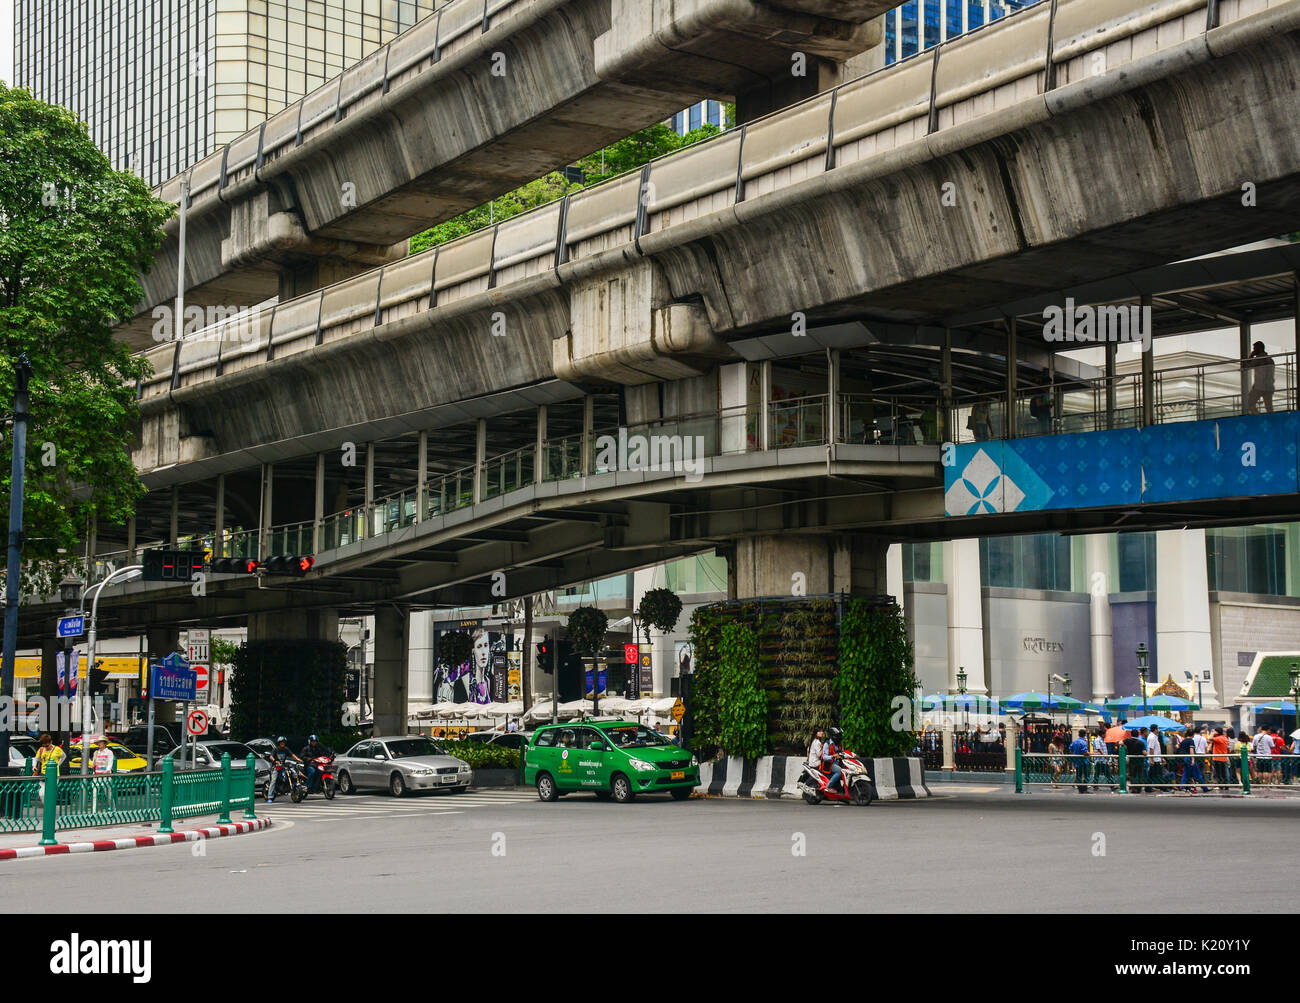 BANGKOK, THAILAND - JUN 18, 2016. Traffic at Siam district in Bangkok, Thailand. Annually an estimated 150,000 new cars join the already heavily conge Stock Photo